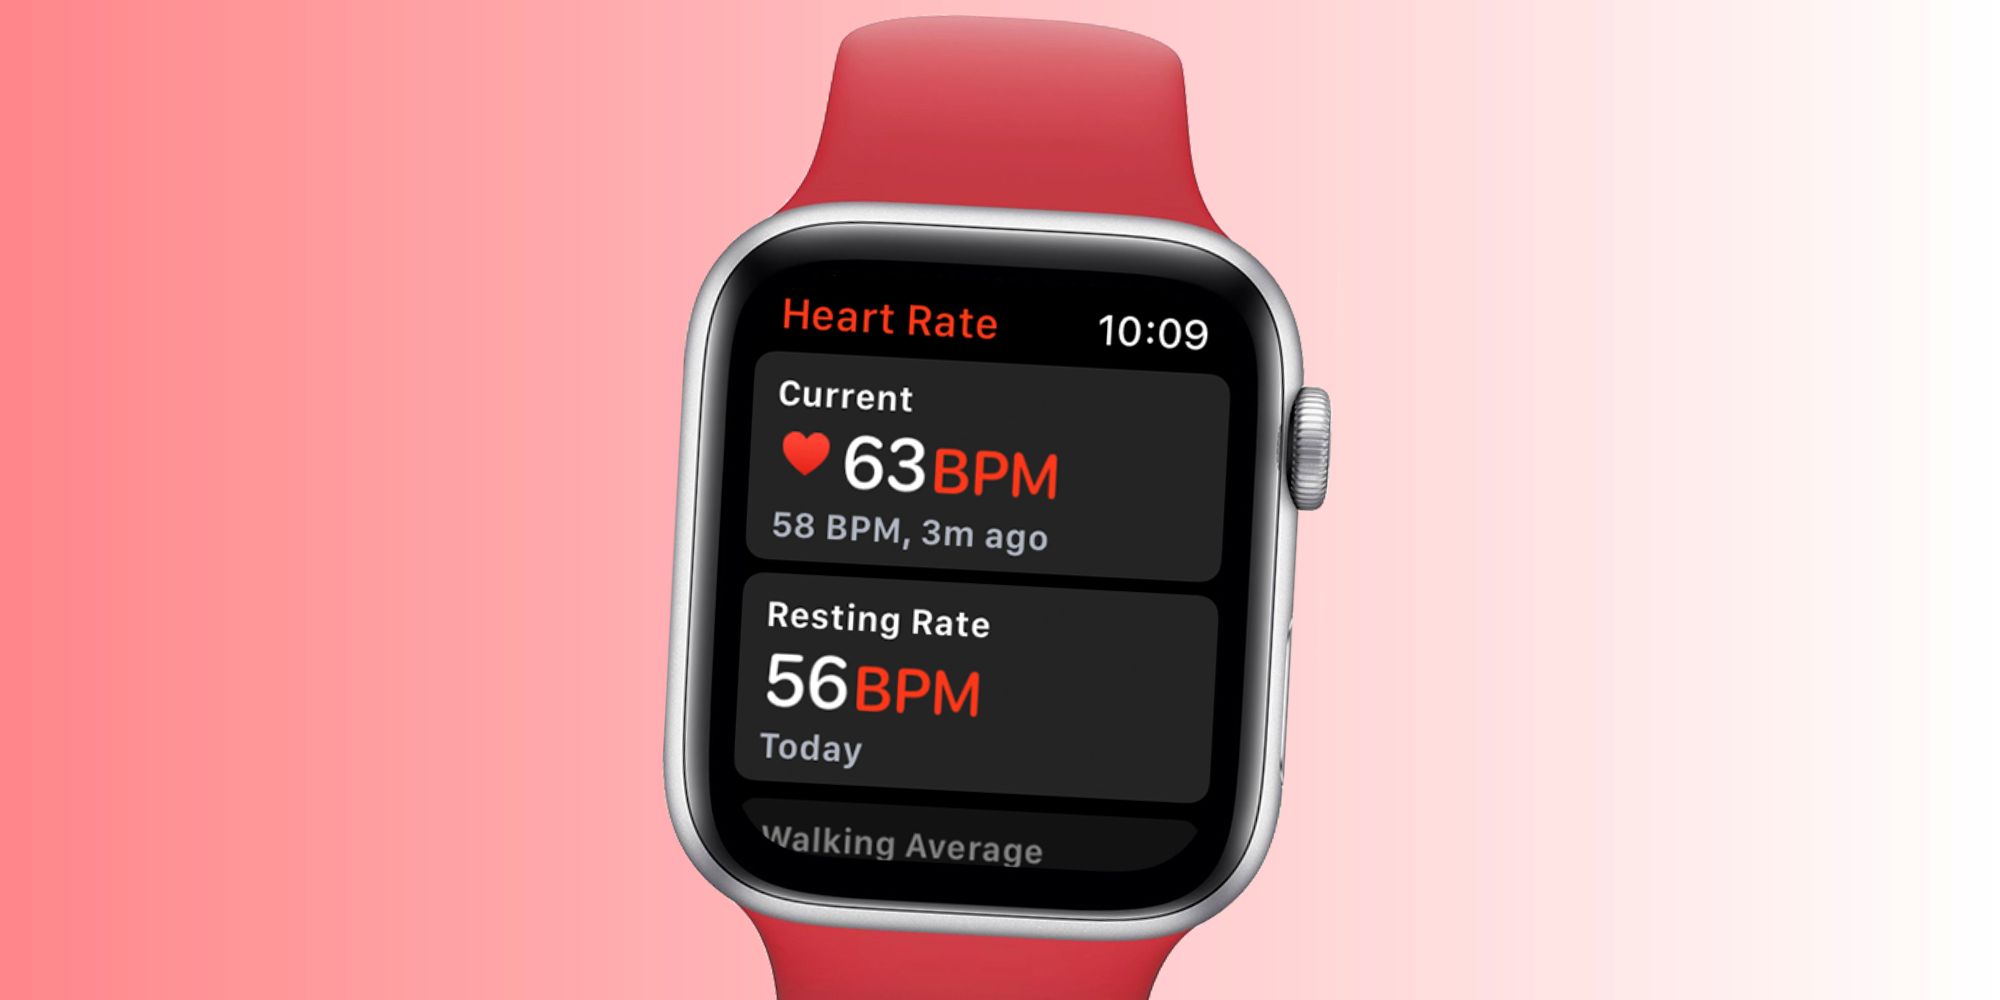 Apple Watch running the heart rate app